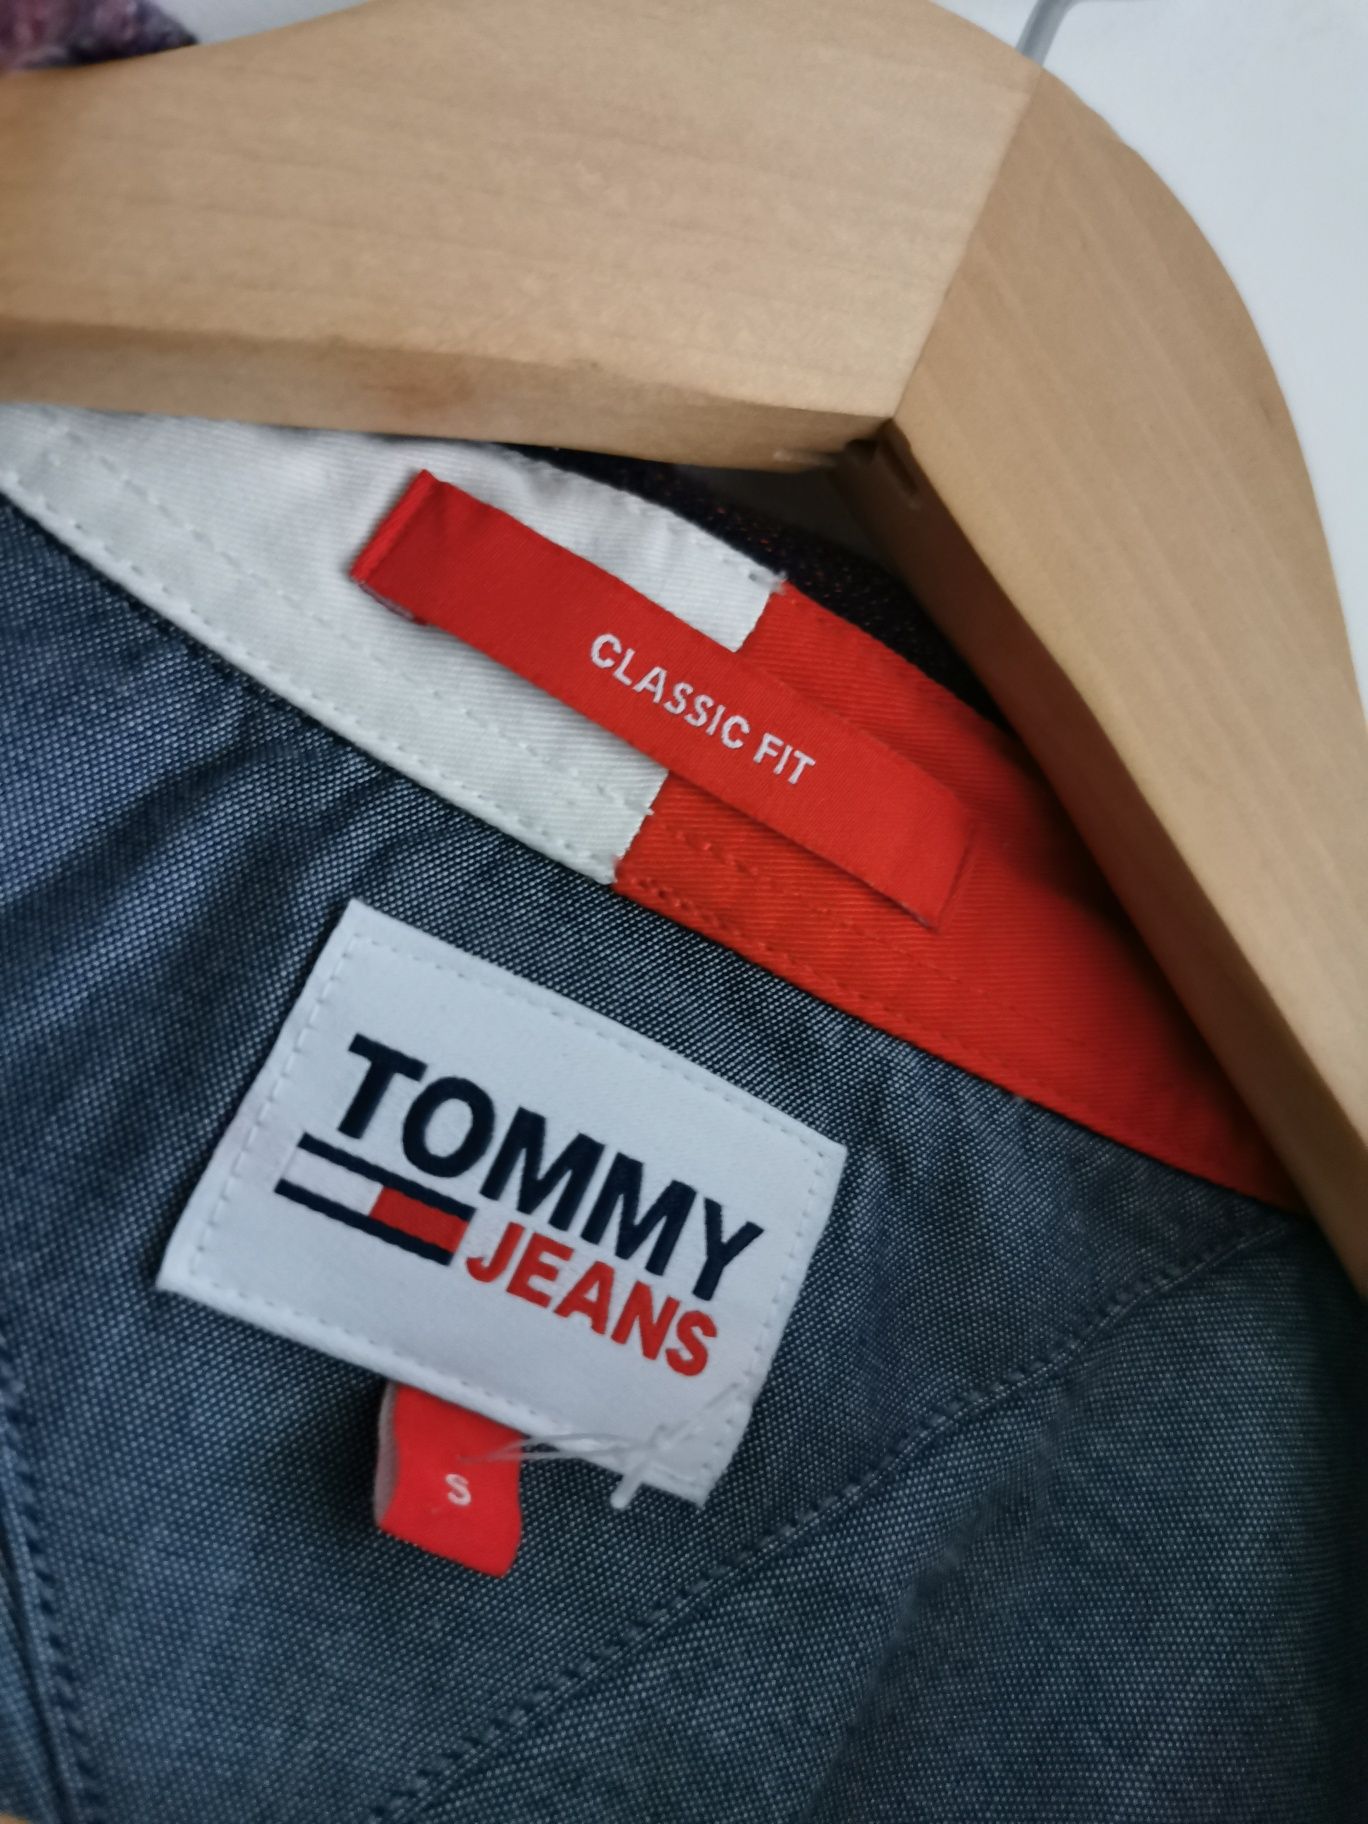 Tommy Jeans koszula męska flanelowa logowana S/M